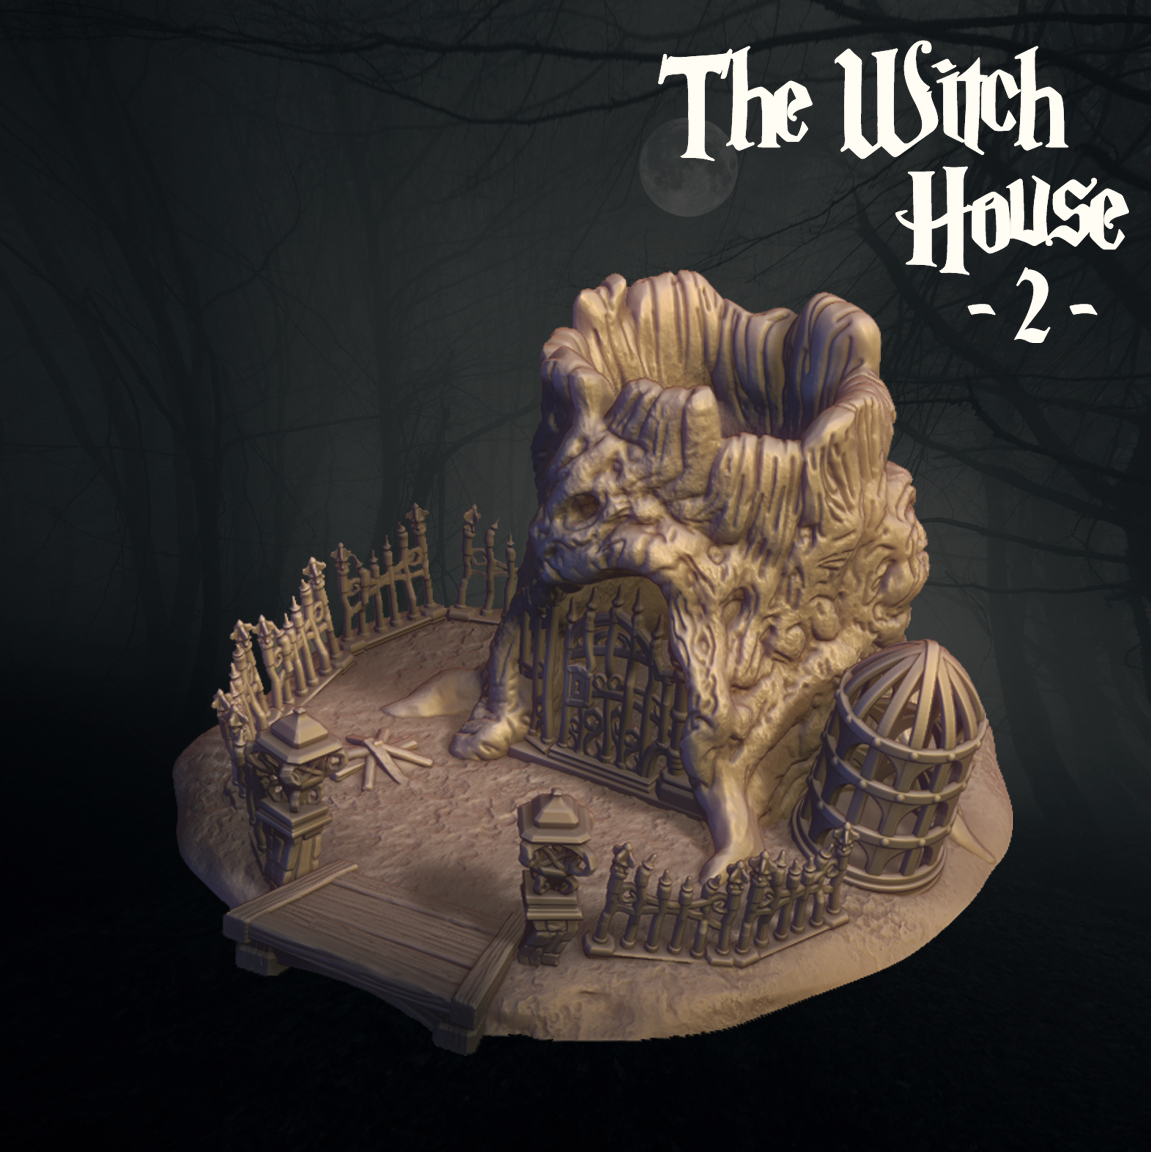 The Witch House - 2
#tabletoprpg #tabletopterrain #tabletopgamer
#wargames #tabletop #stl #diorama #rpg #trpg #pratheron #kickstarter #miniature